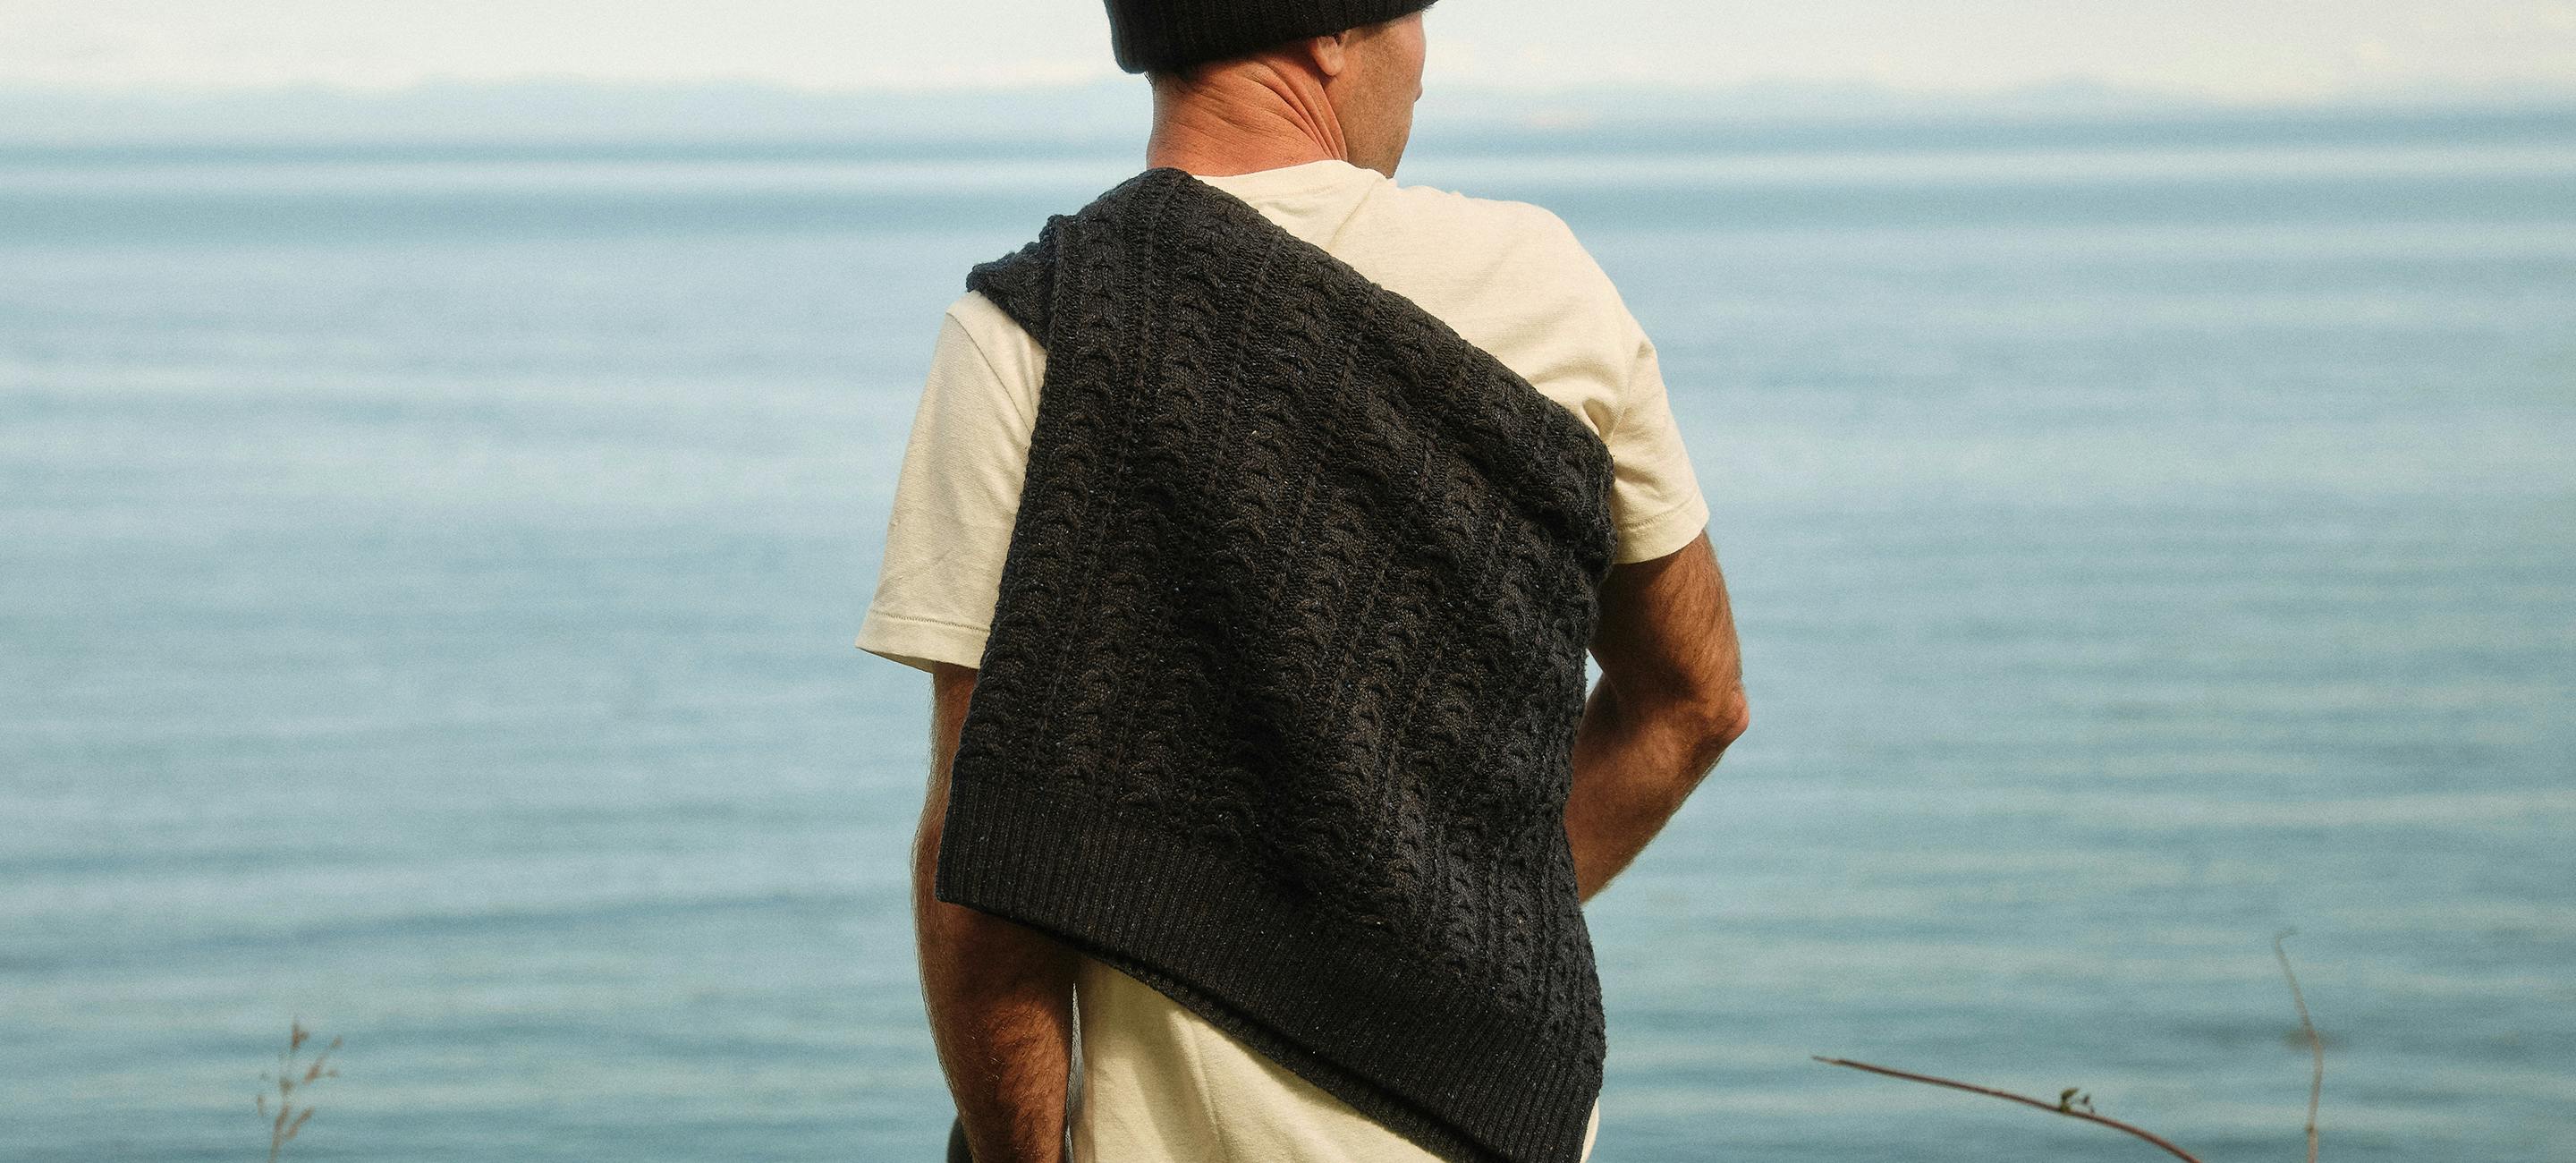 Man standing by water wearing seawool sweater on back